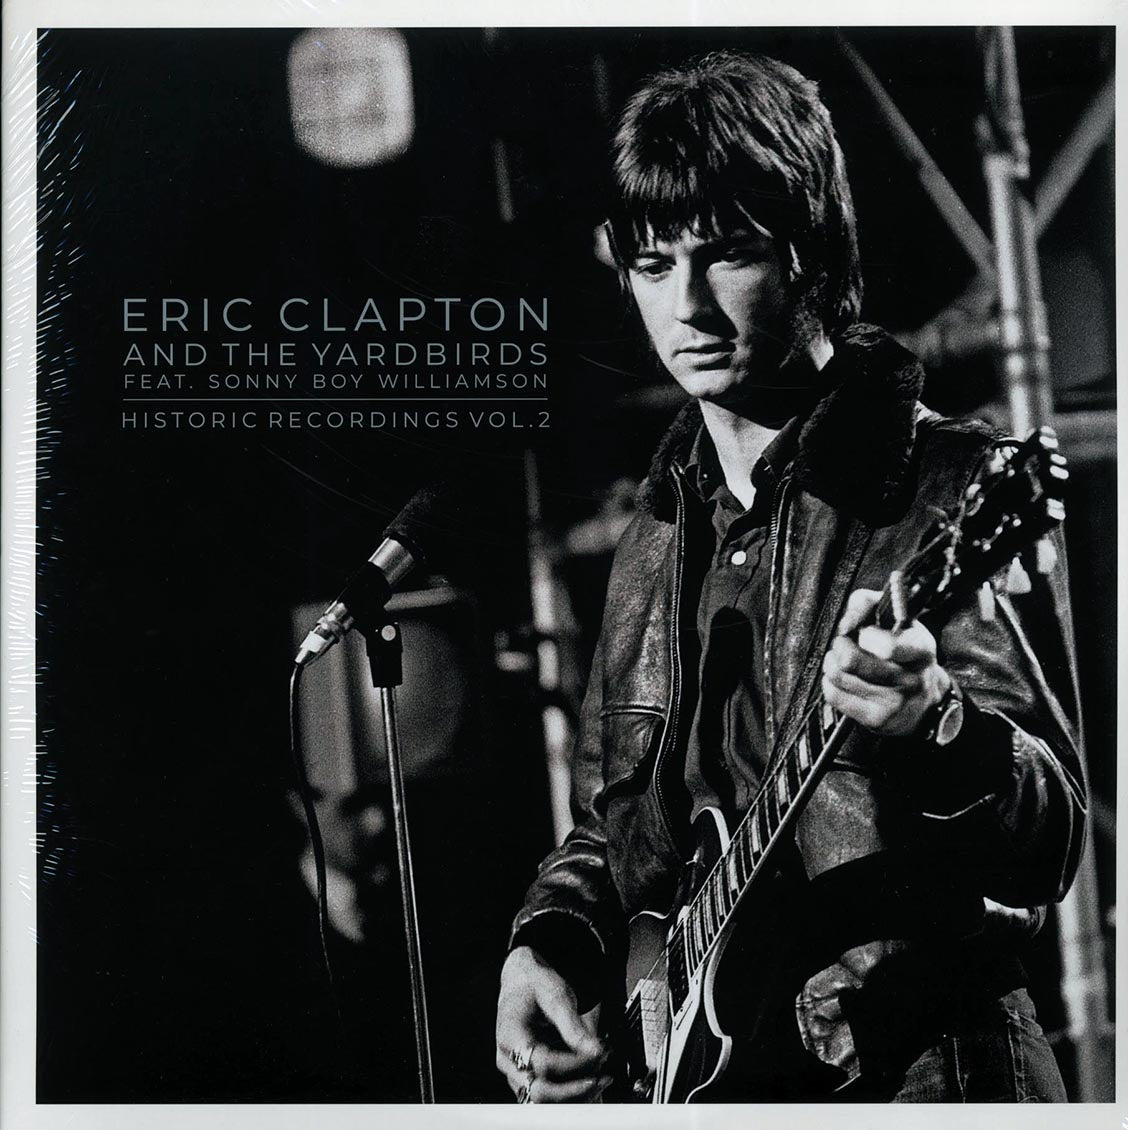 Eric Clapton & The Yardbirds, Sonny Boy Williamson - Historic Recordings Volume 2 (2xLP) - Vinyl LP